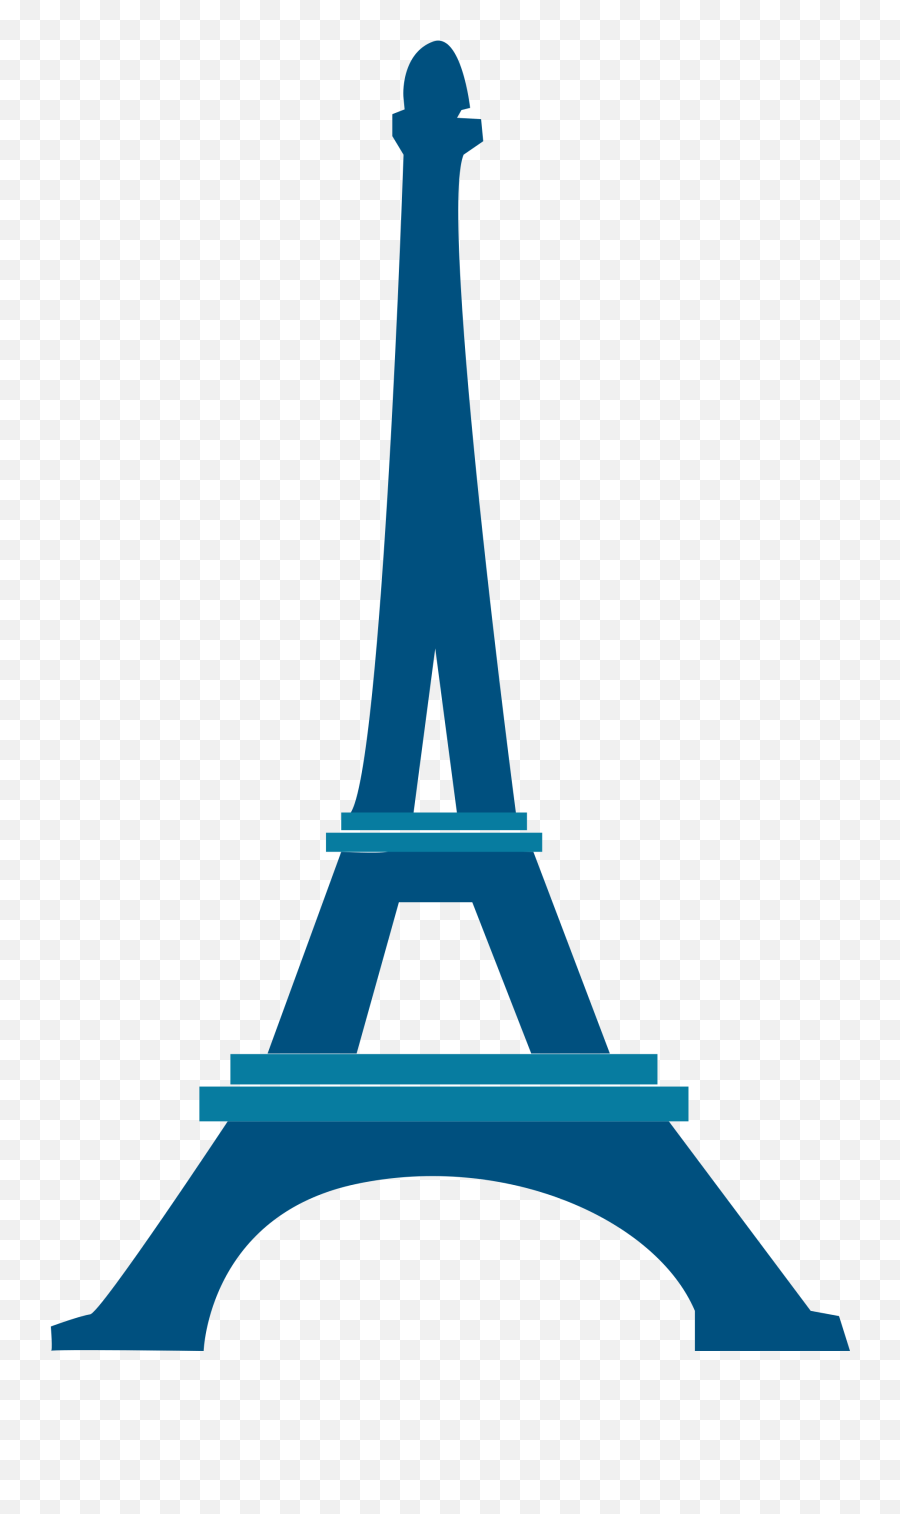 Eiffel Tower Icons - Eiffel Tower Adobe Illustrator Clipart Eiffel Tower Clipart Blue Emoji,Transparent Background Illustrator